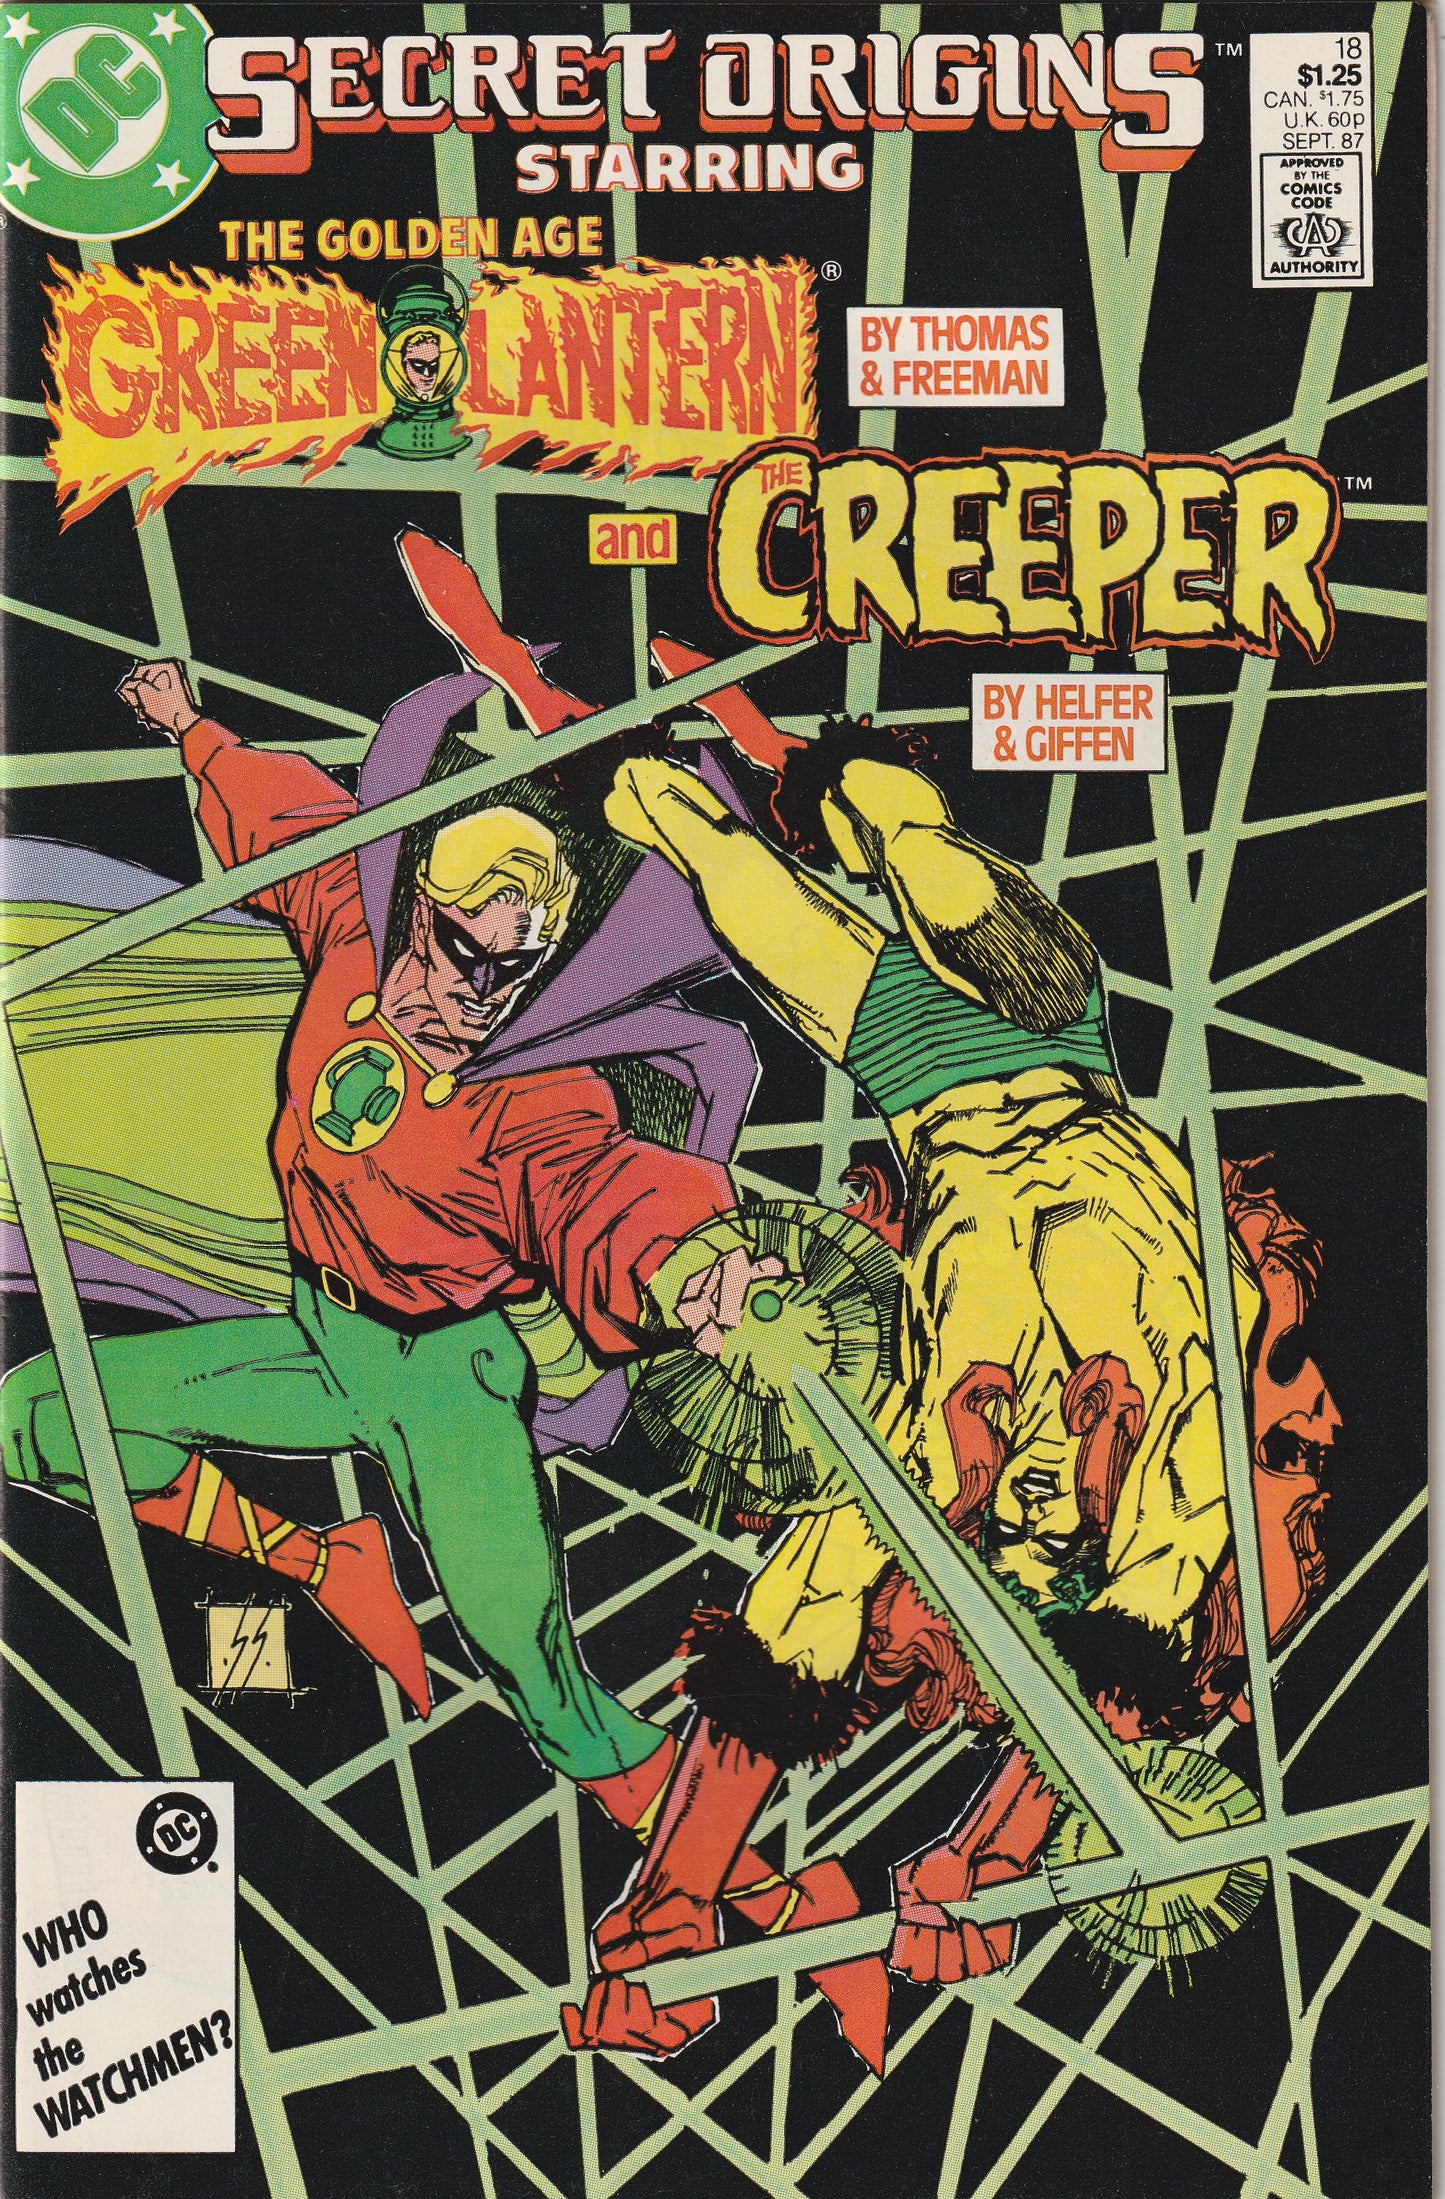 Secret Origins #18 (1987) - The Golden Age Green Lantern & The Creeper